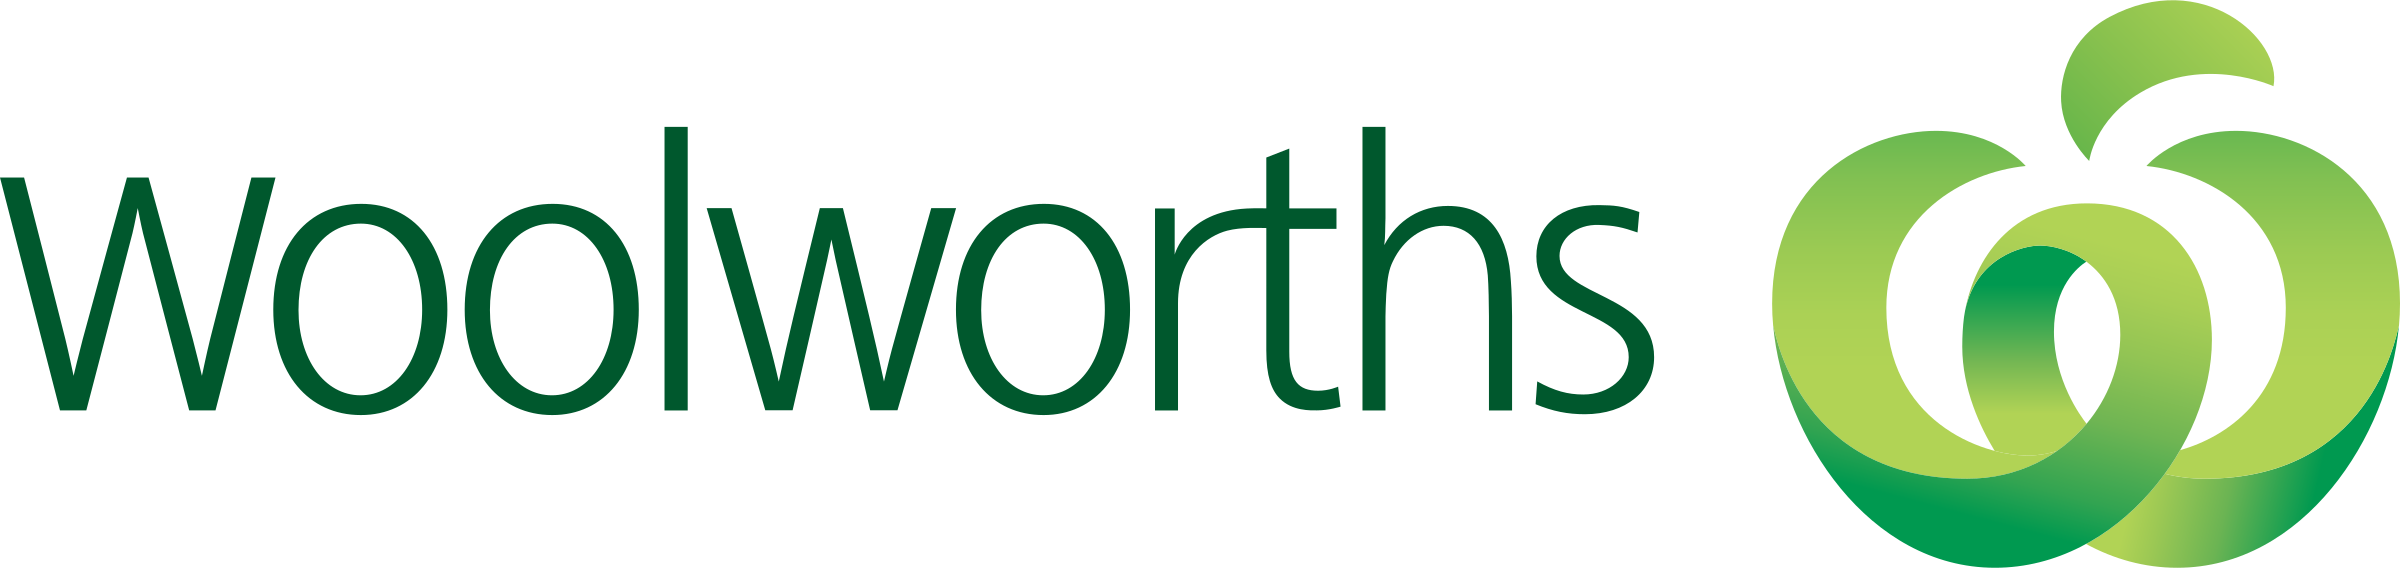 woolworths-5-logo-png-transparent